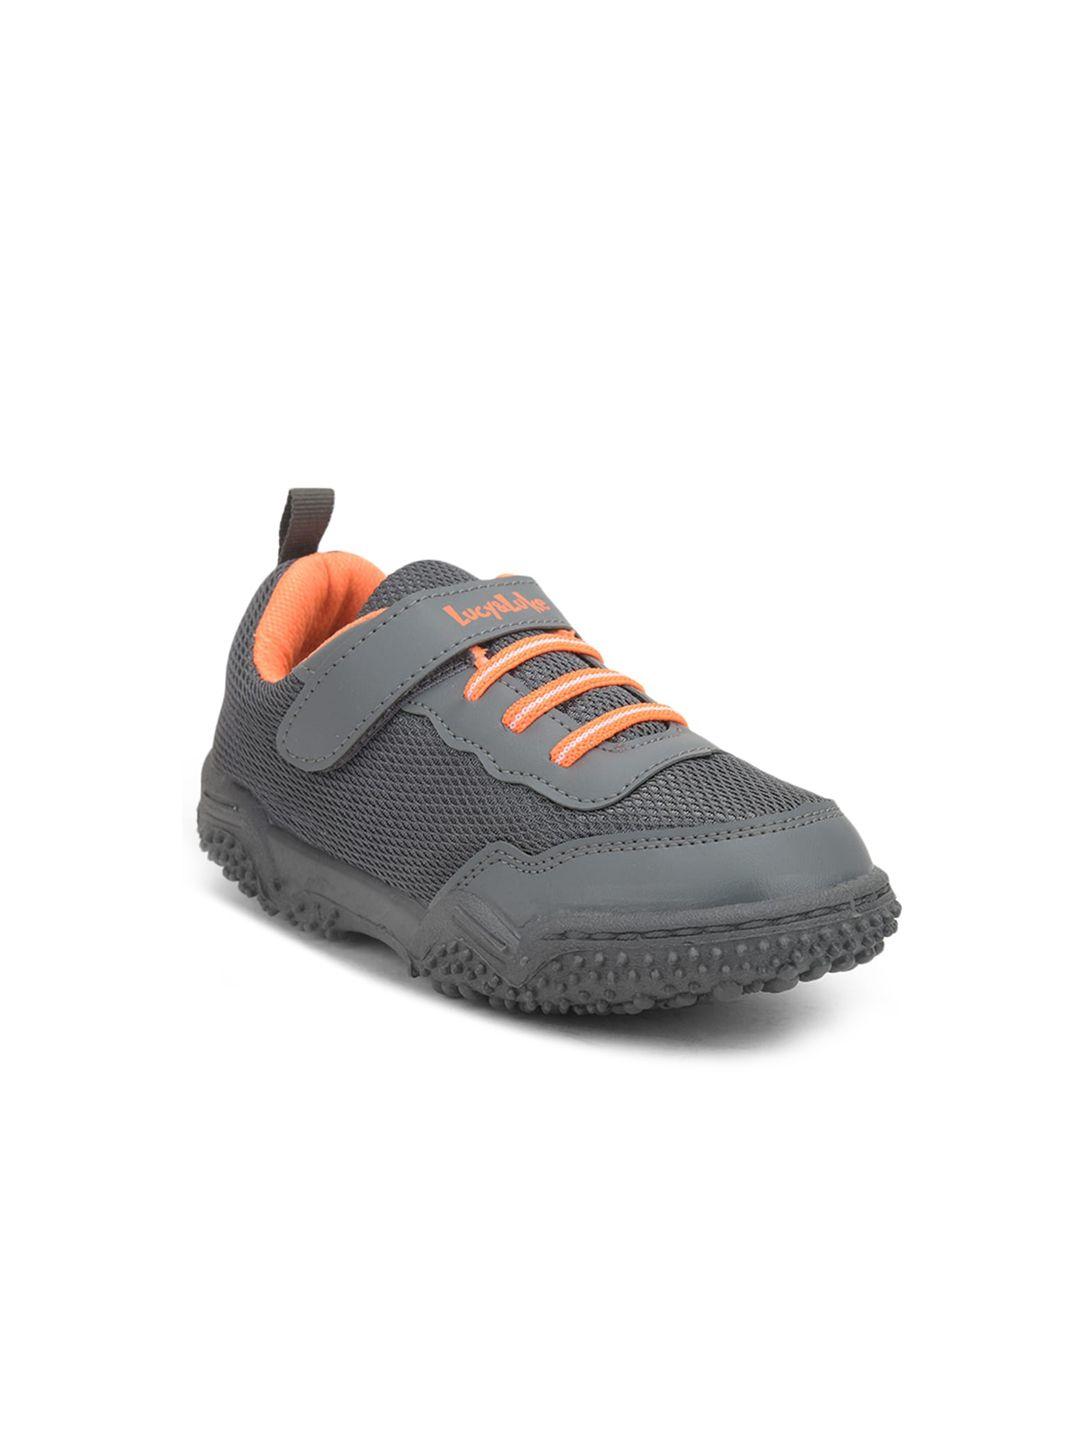 liberty-boys-grey-&-orange-solid-casual-sneakers